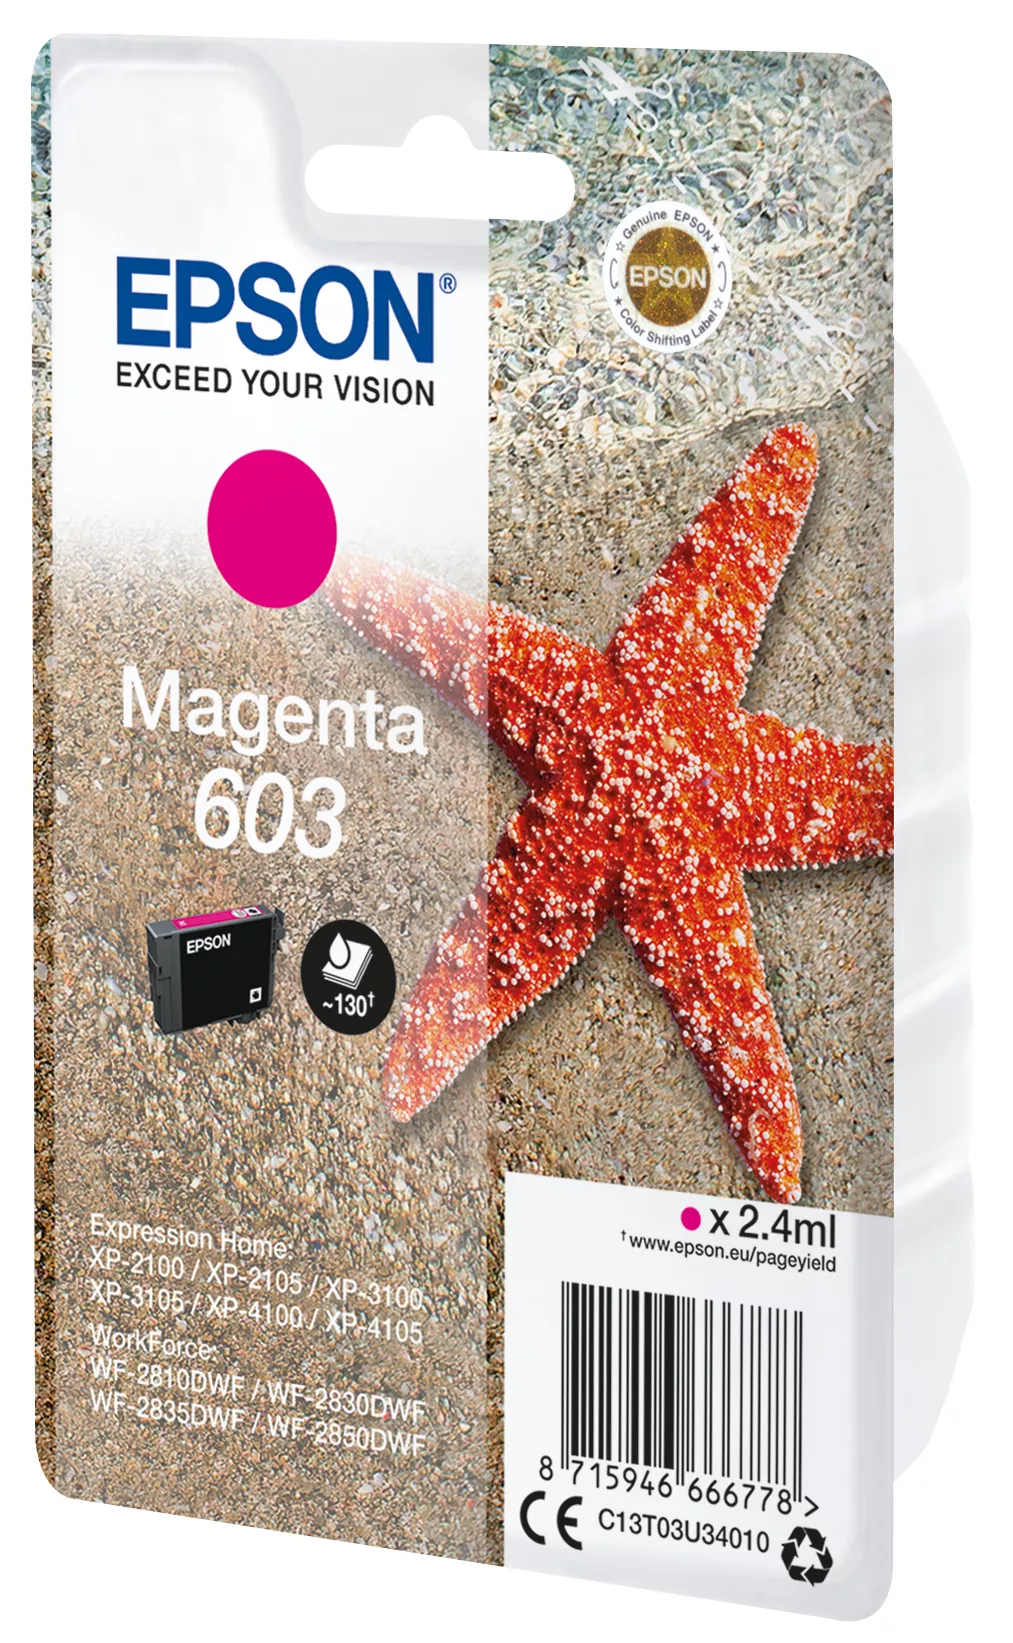 Vente EPSON Singlepack Magenta 603 Ink Epson au meilleur prix - visuel 2